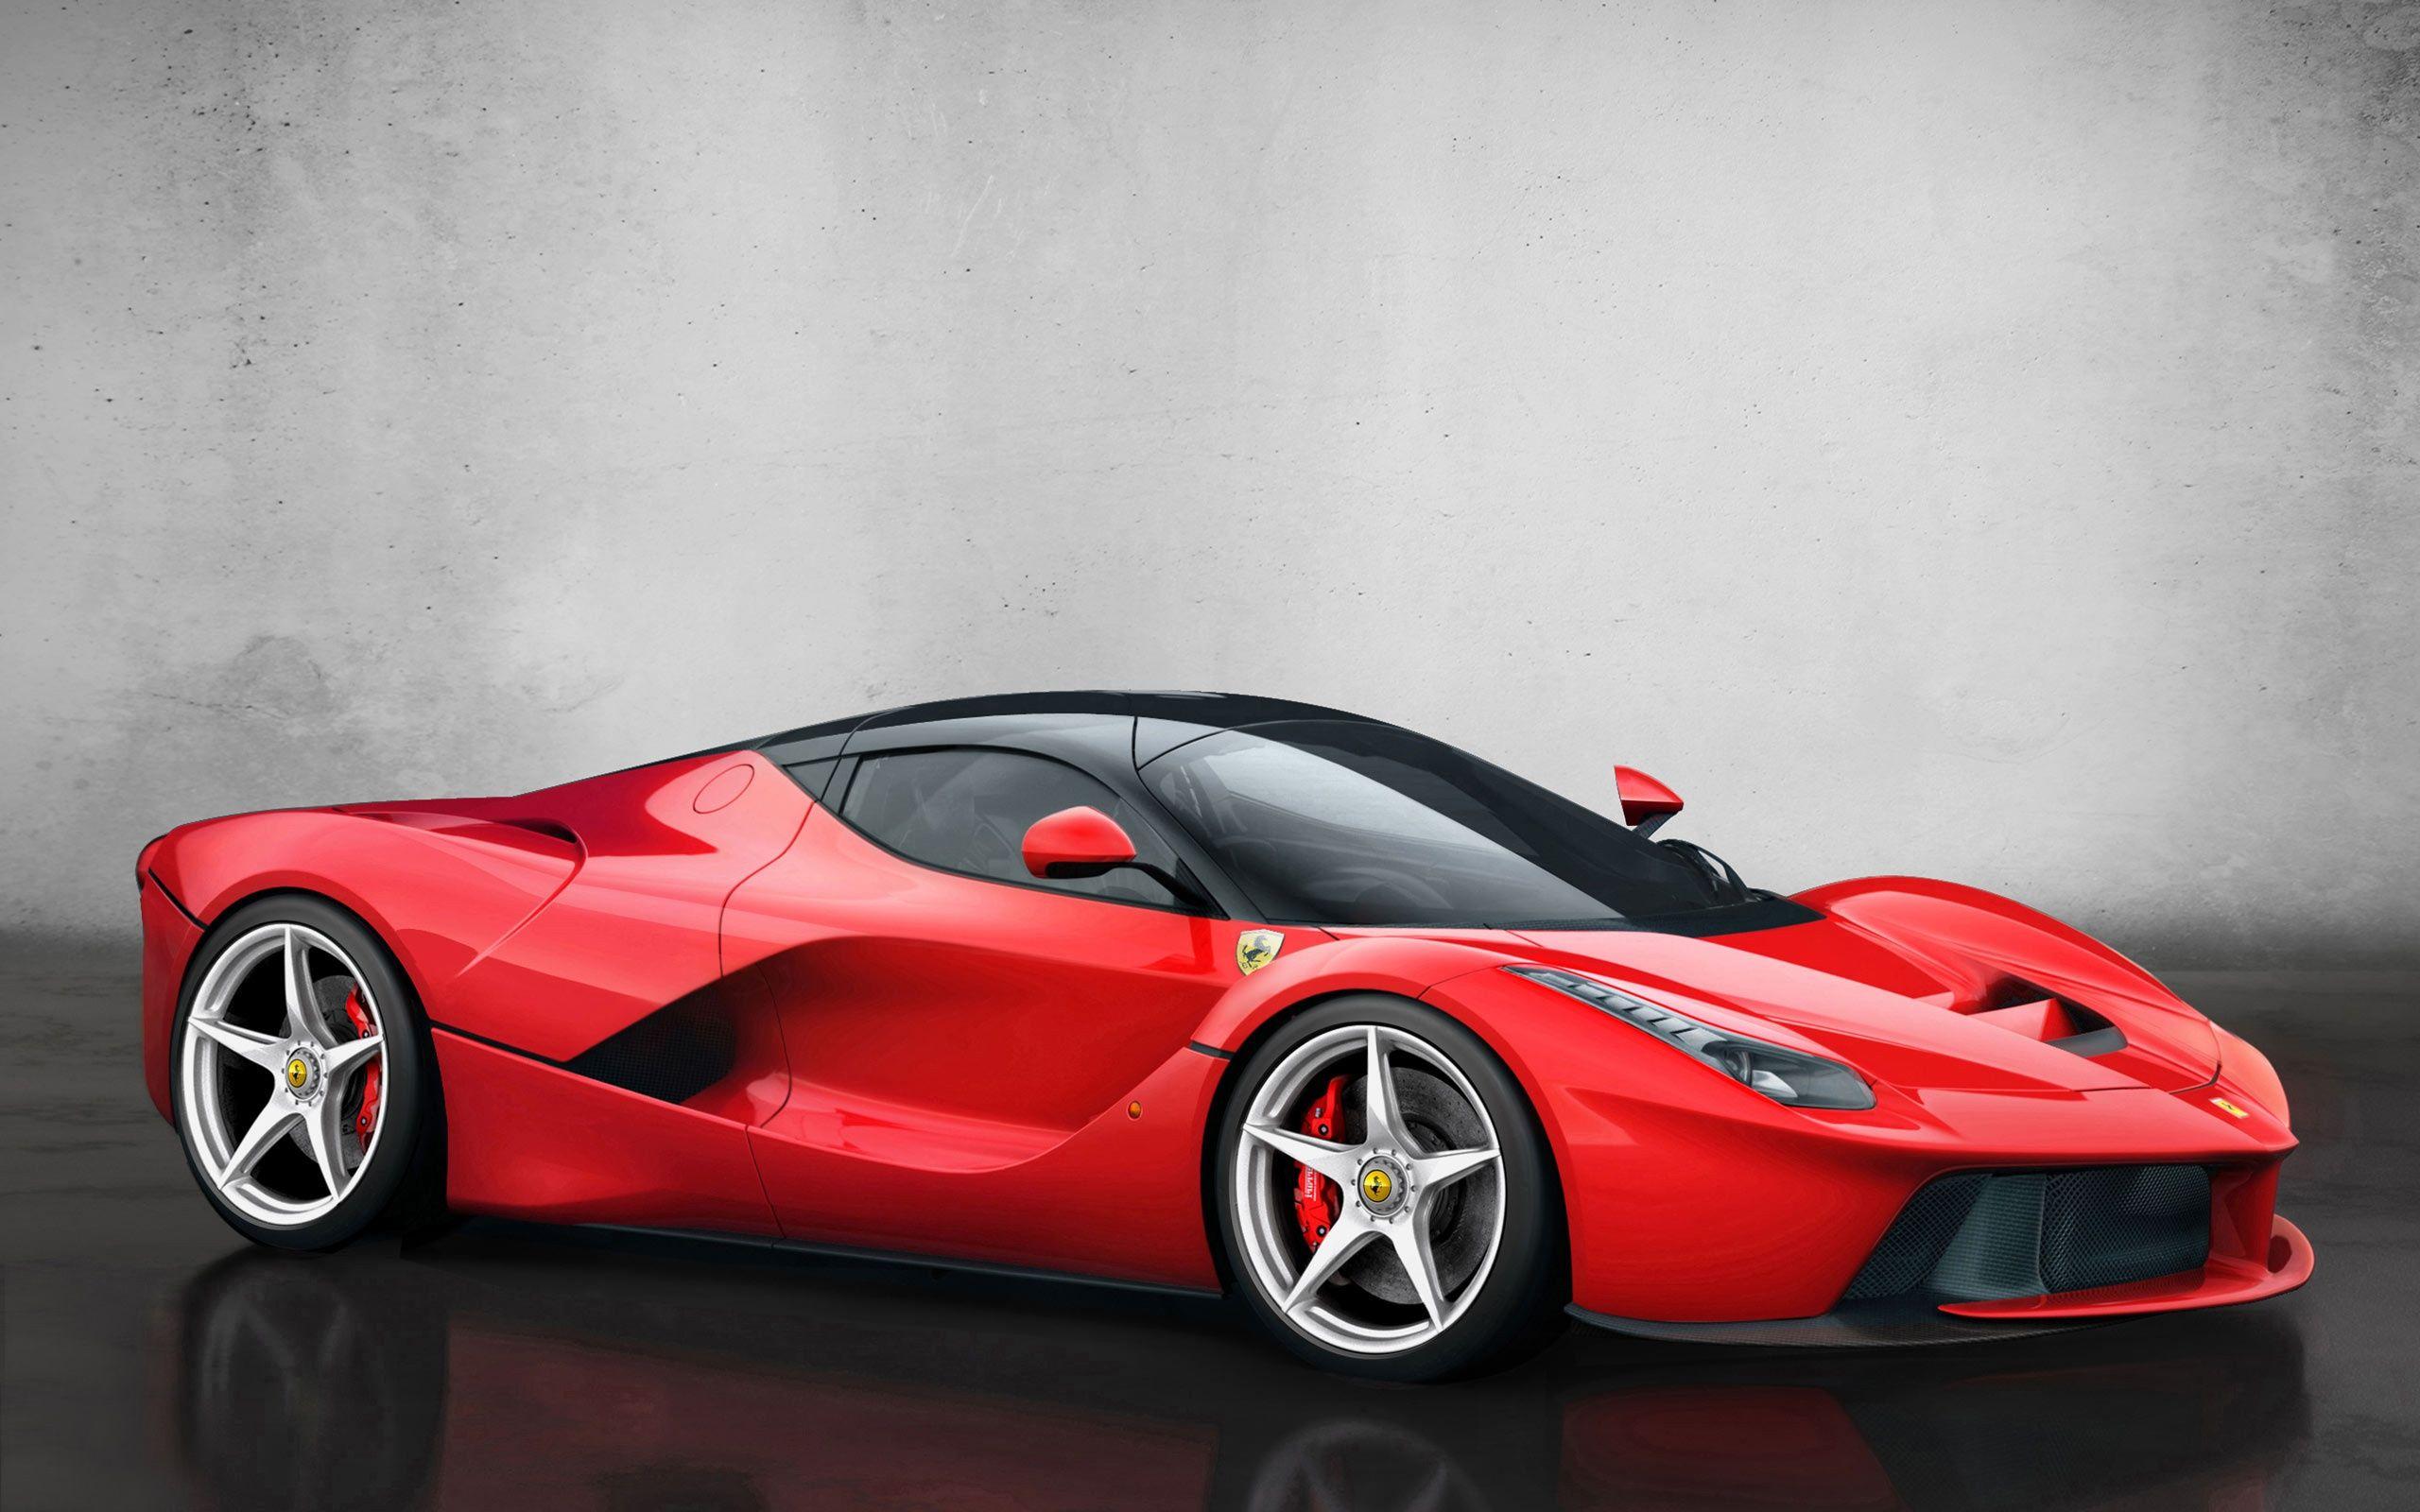 Ferrari Laferrari Wallpaper High Quality